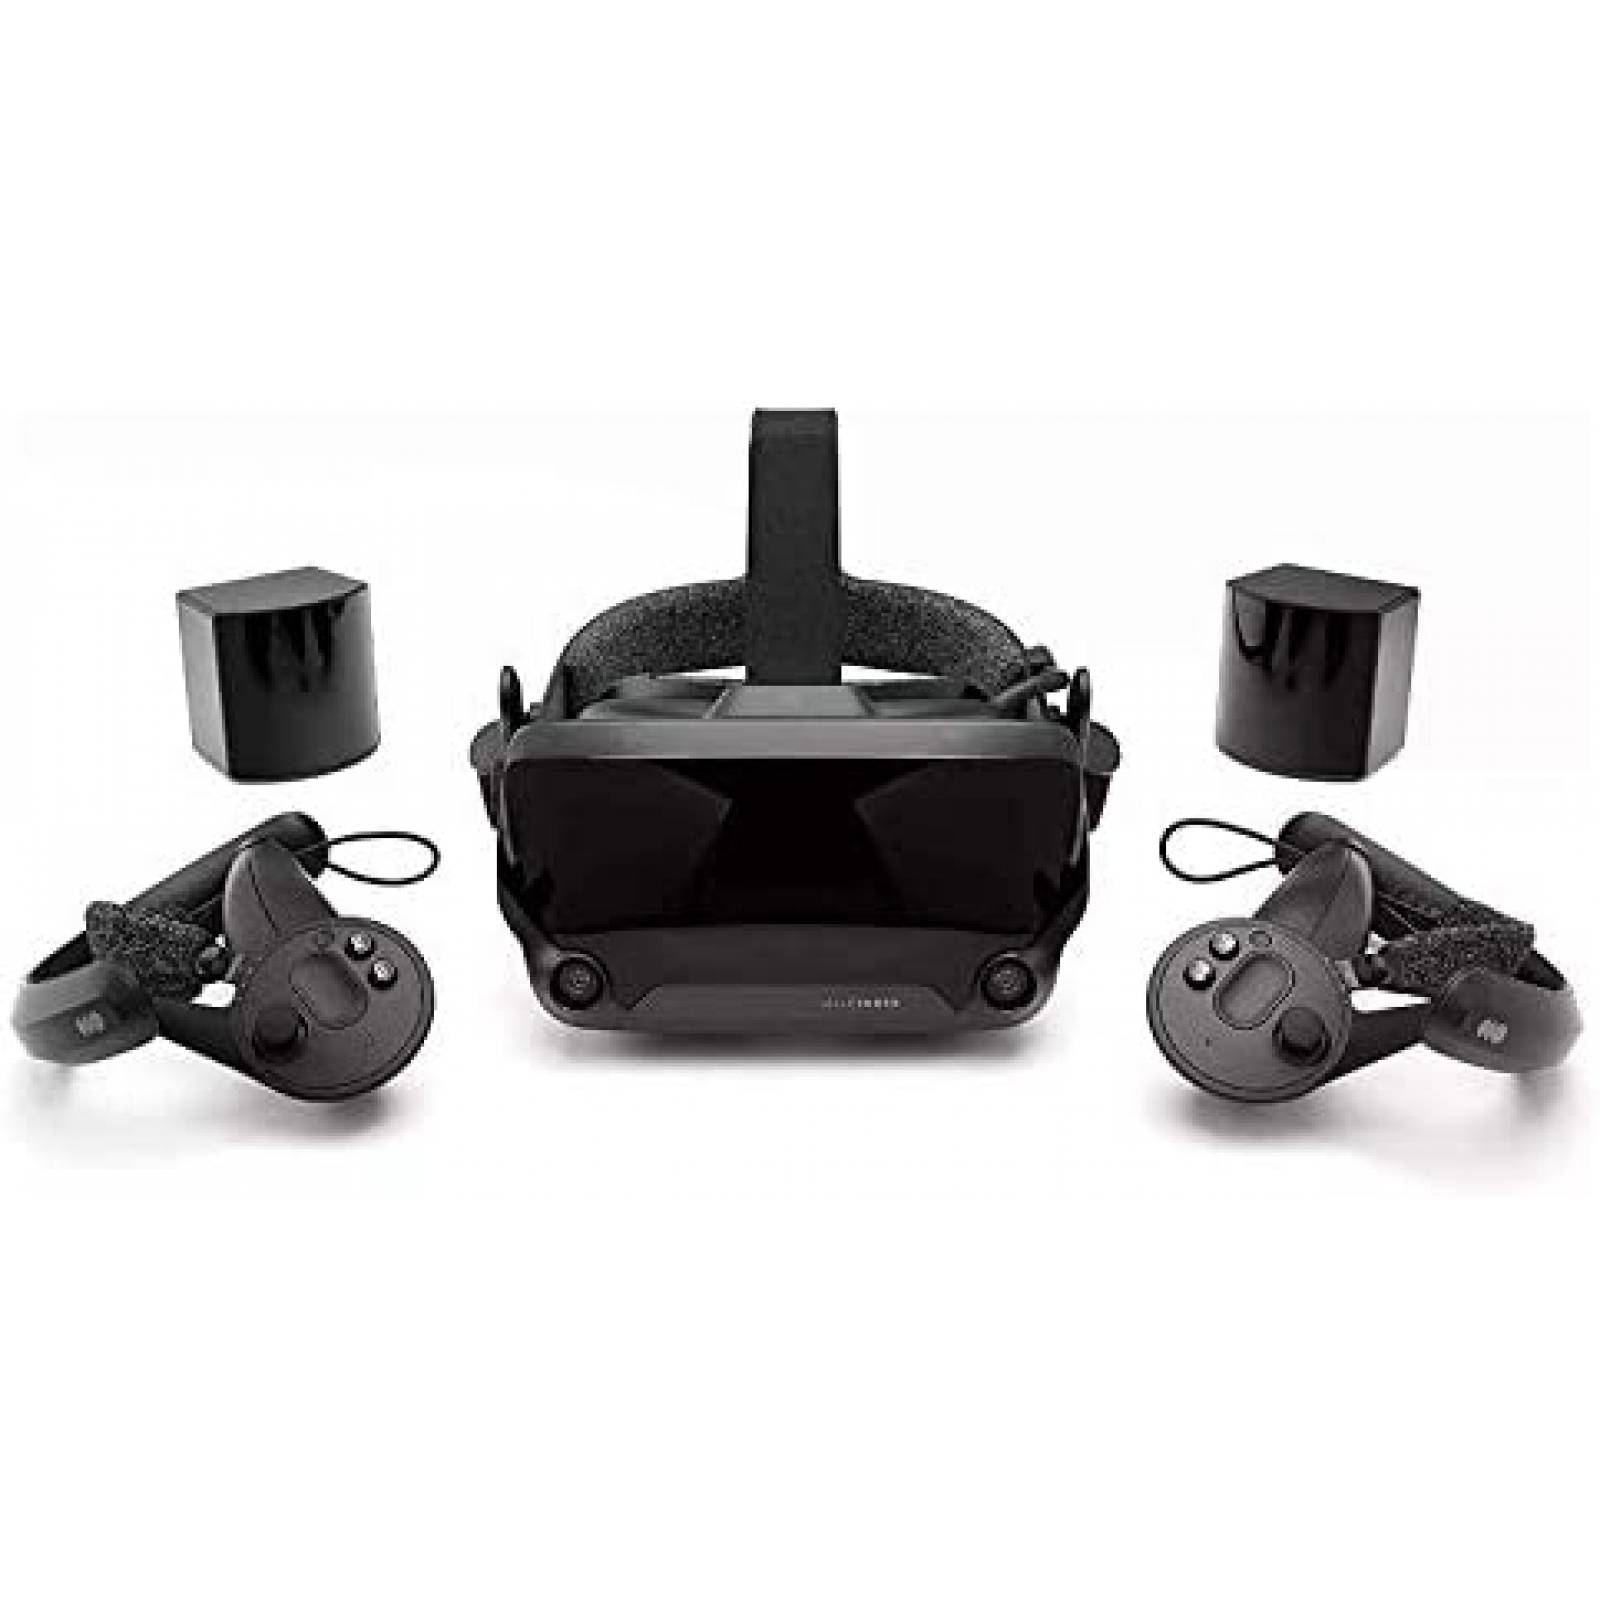 Kit Realidad Virtual Valve Index VR Visor y Controles -Negro